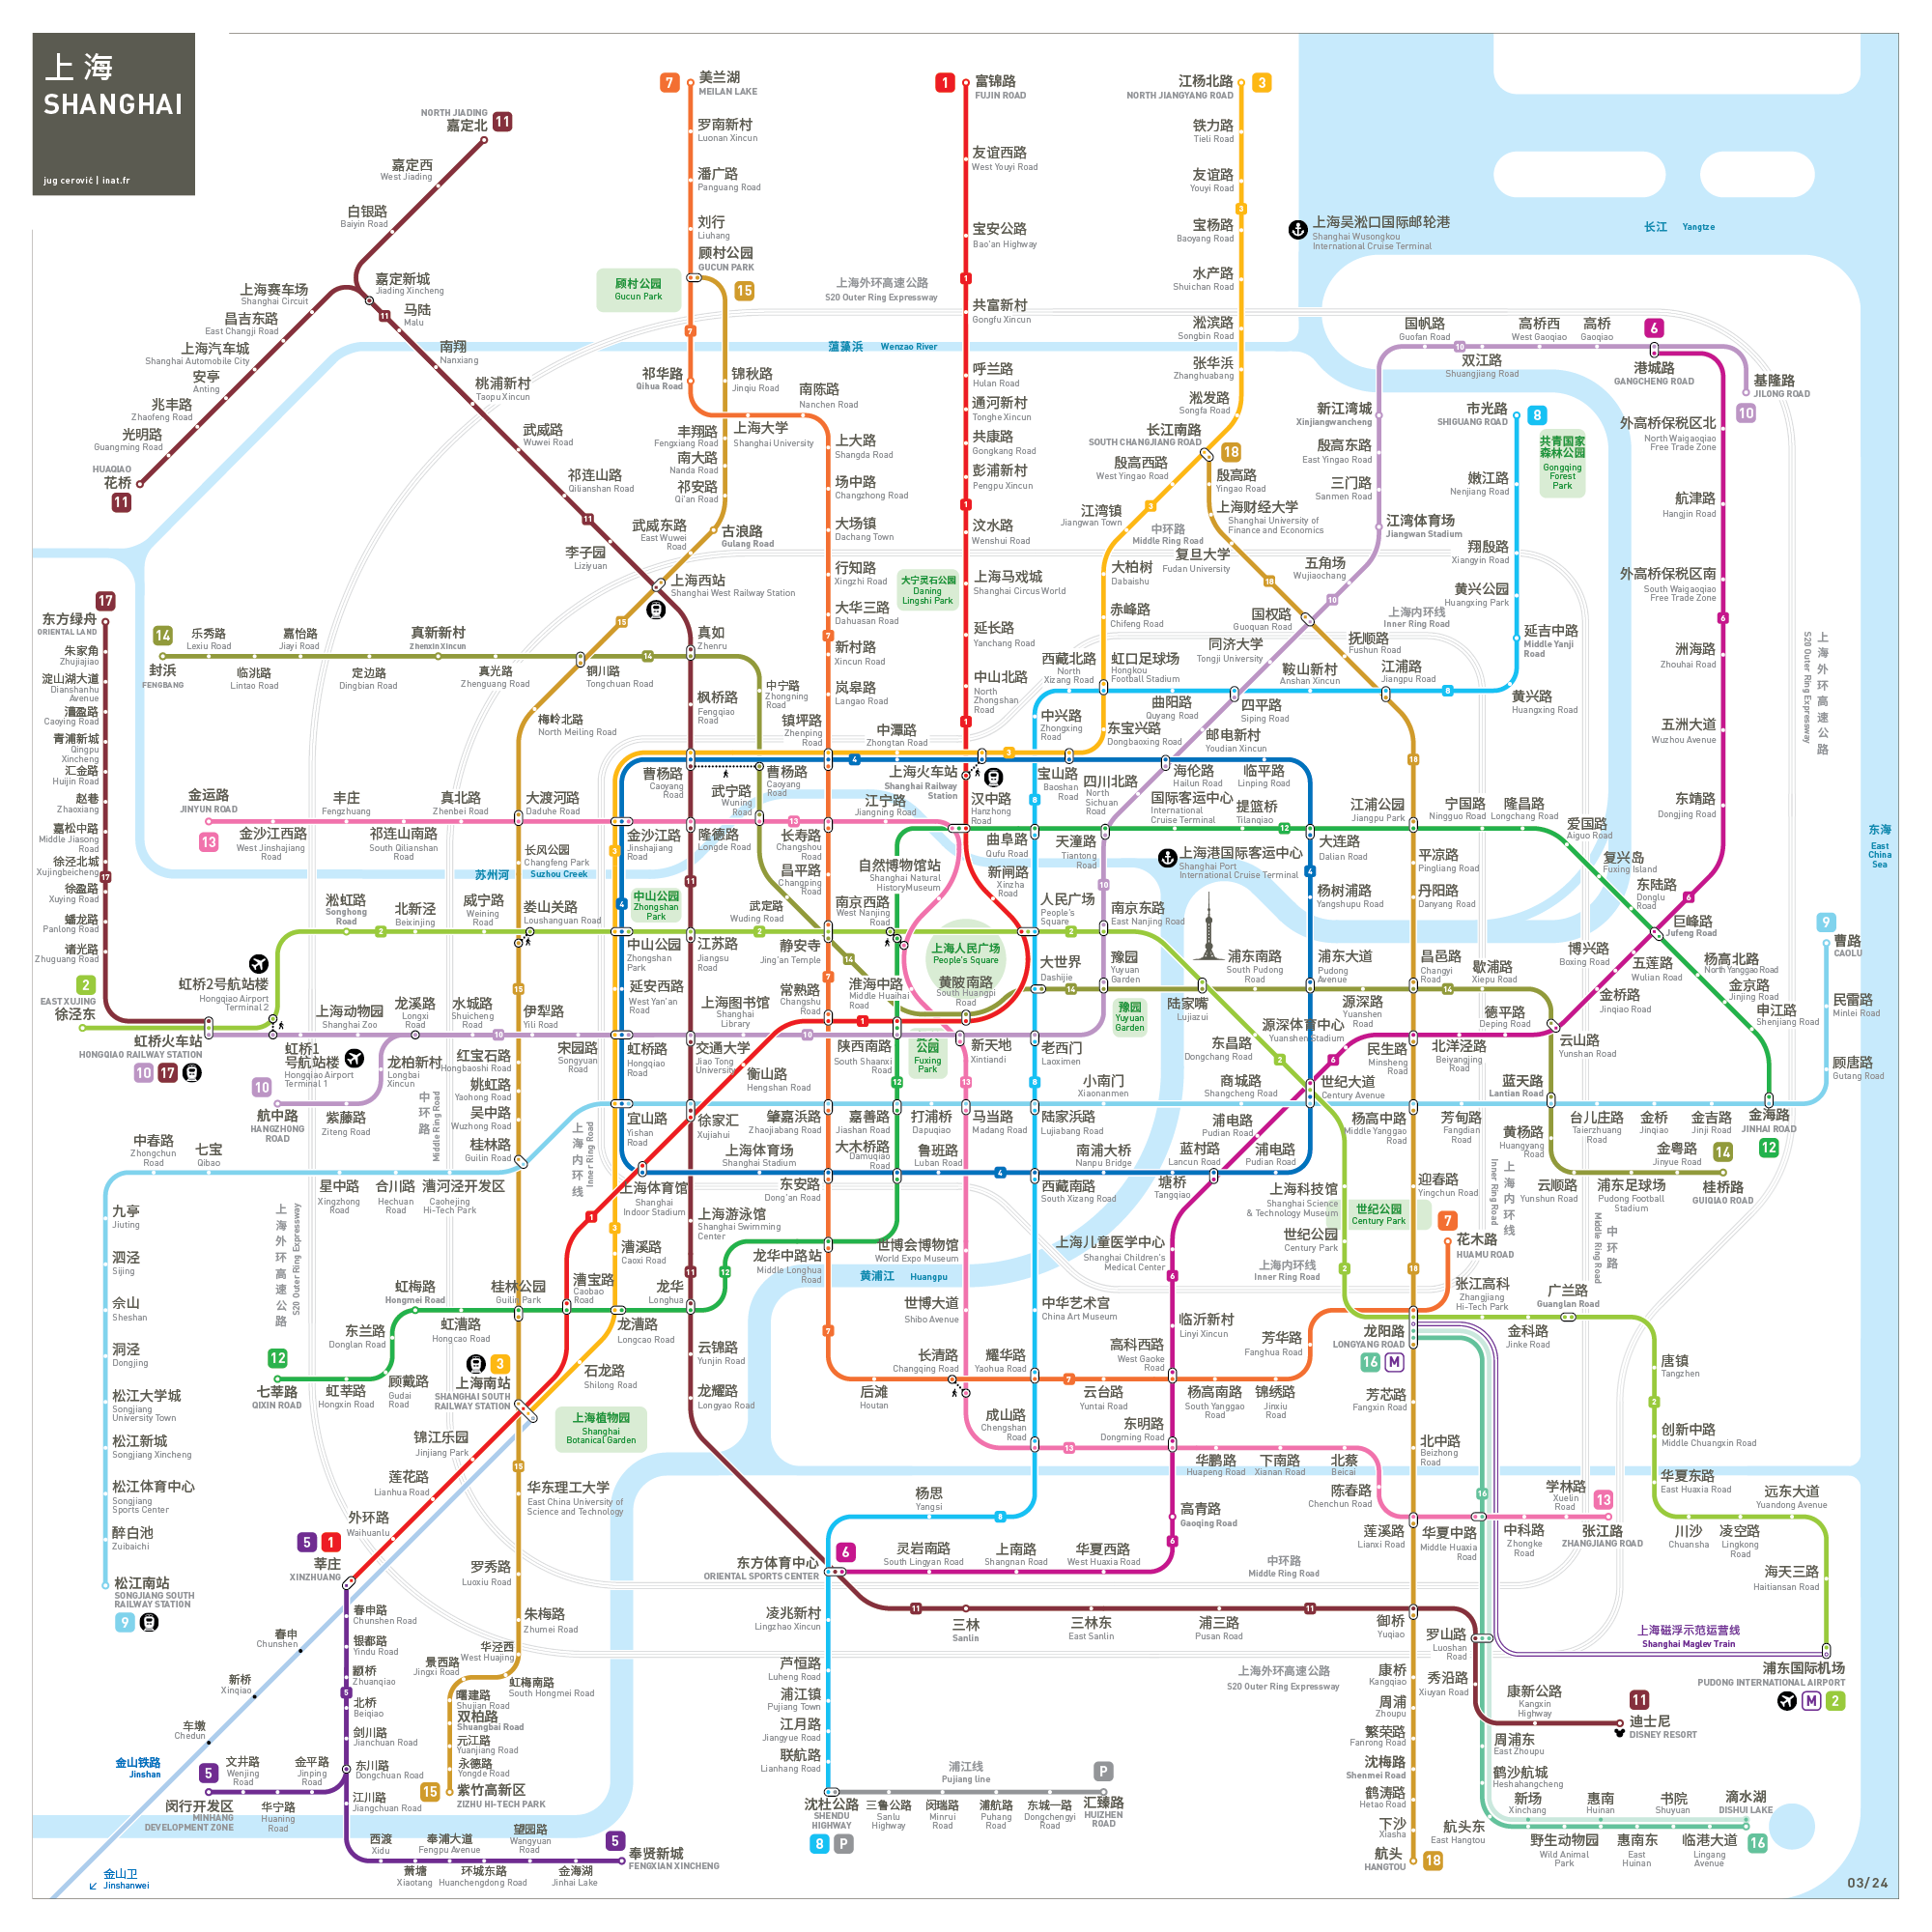 Shanghai metro map